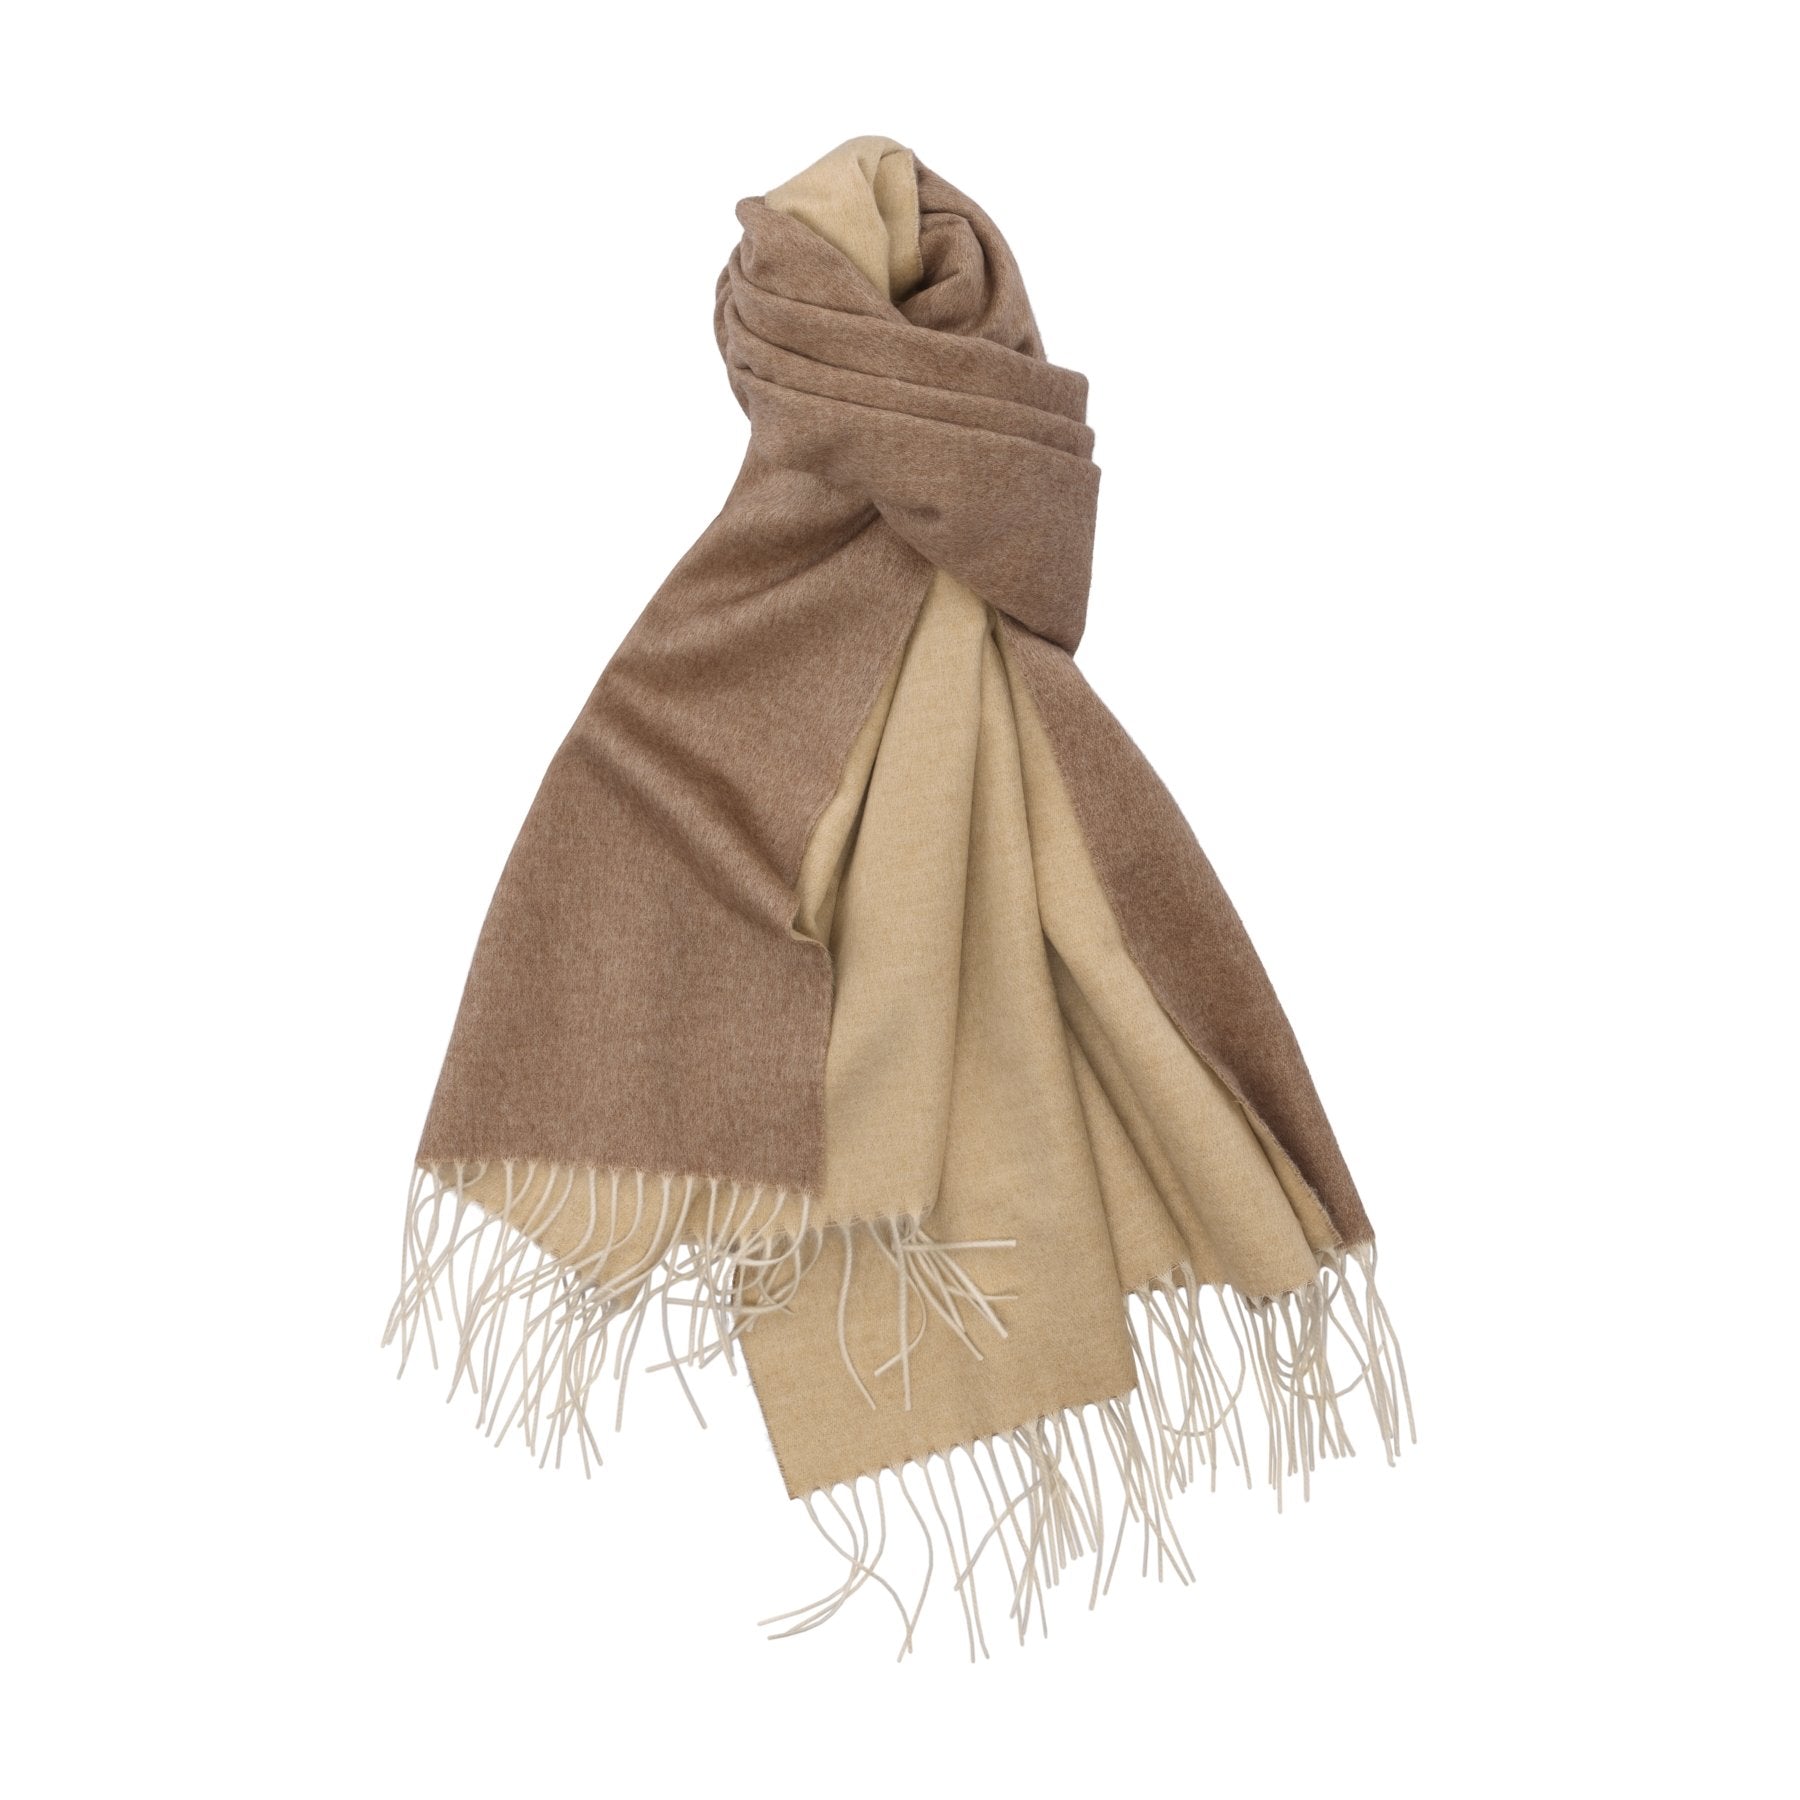 Cashmere scarf in beige tones